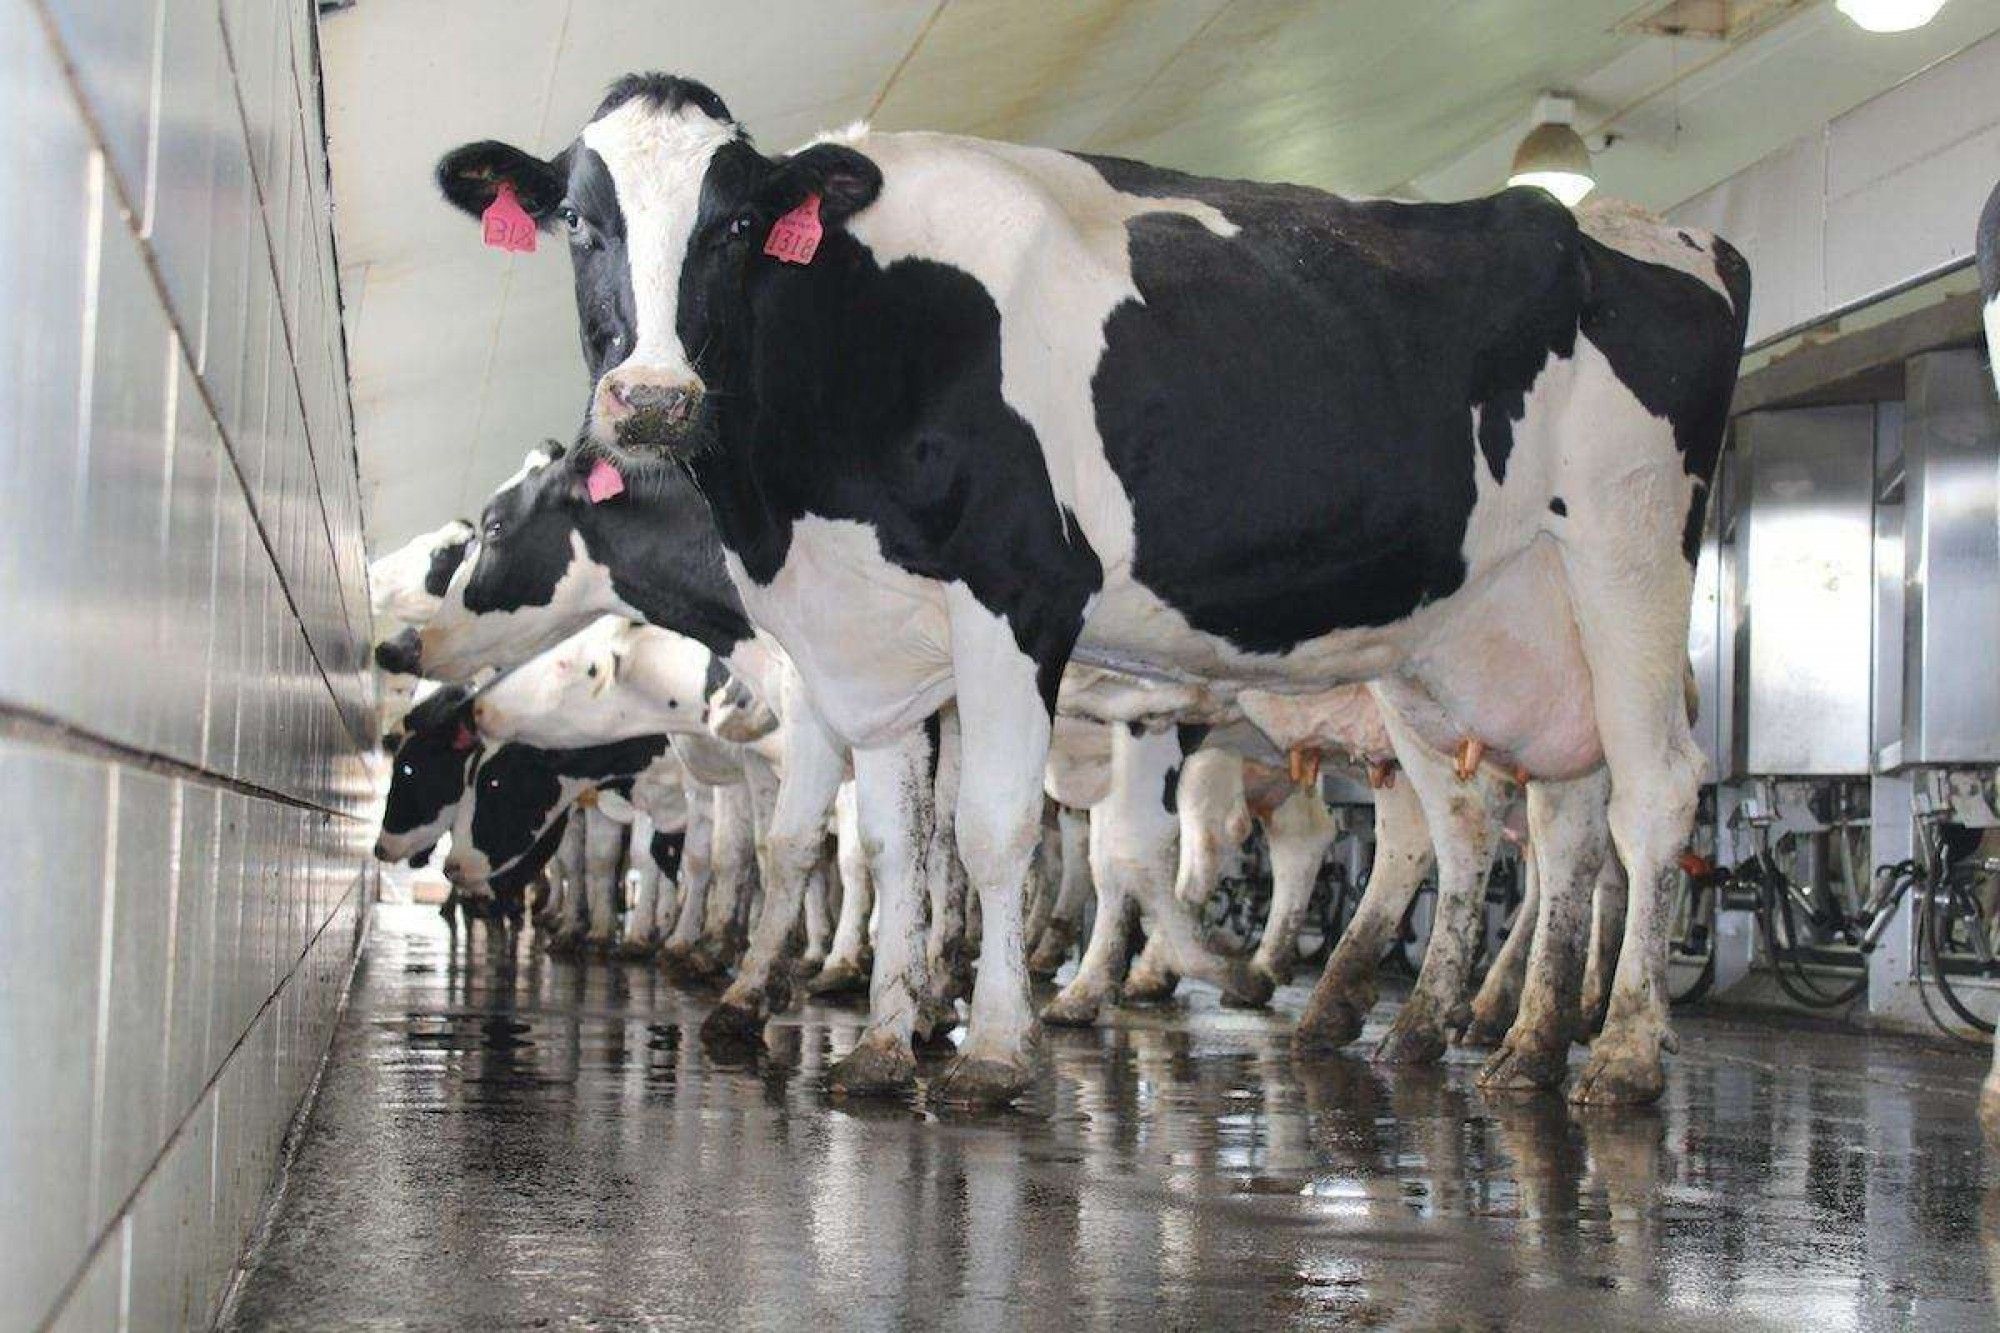 lapte ferme producție - AgroExpert.md